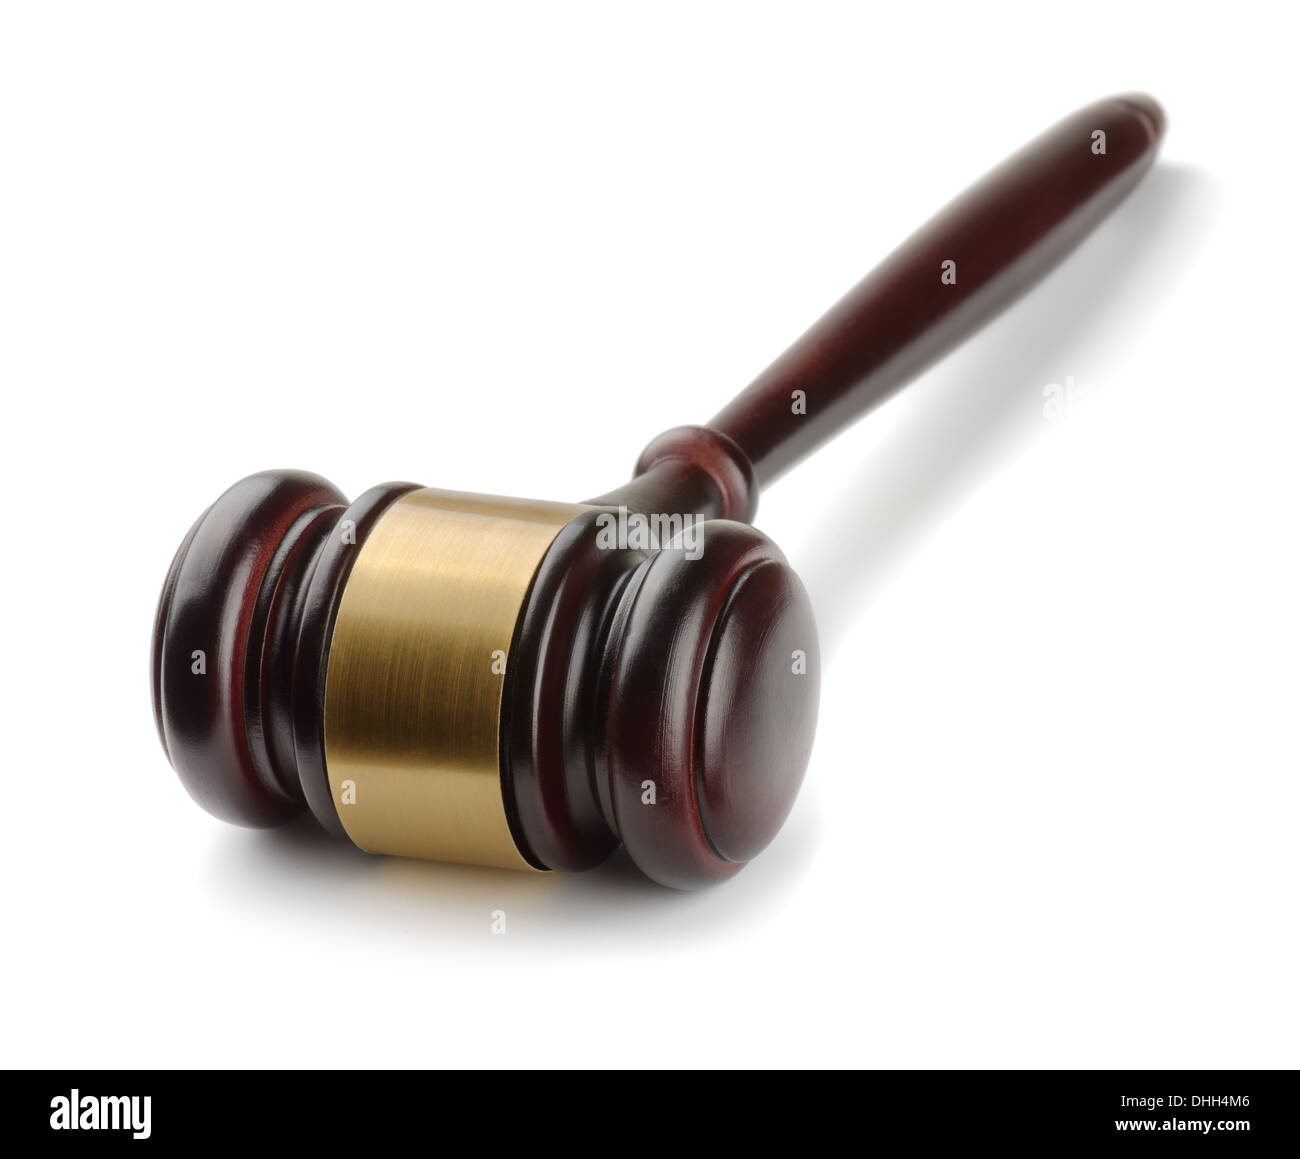 Wooden judges gavel isolated on white Stock Photo